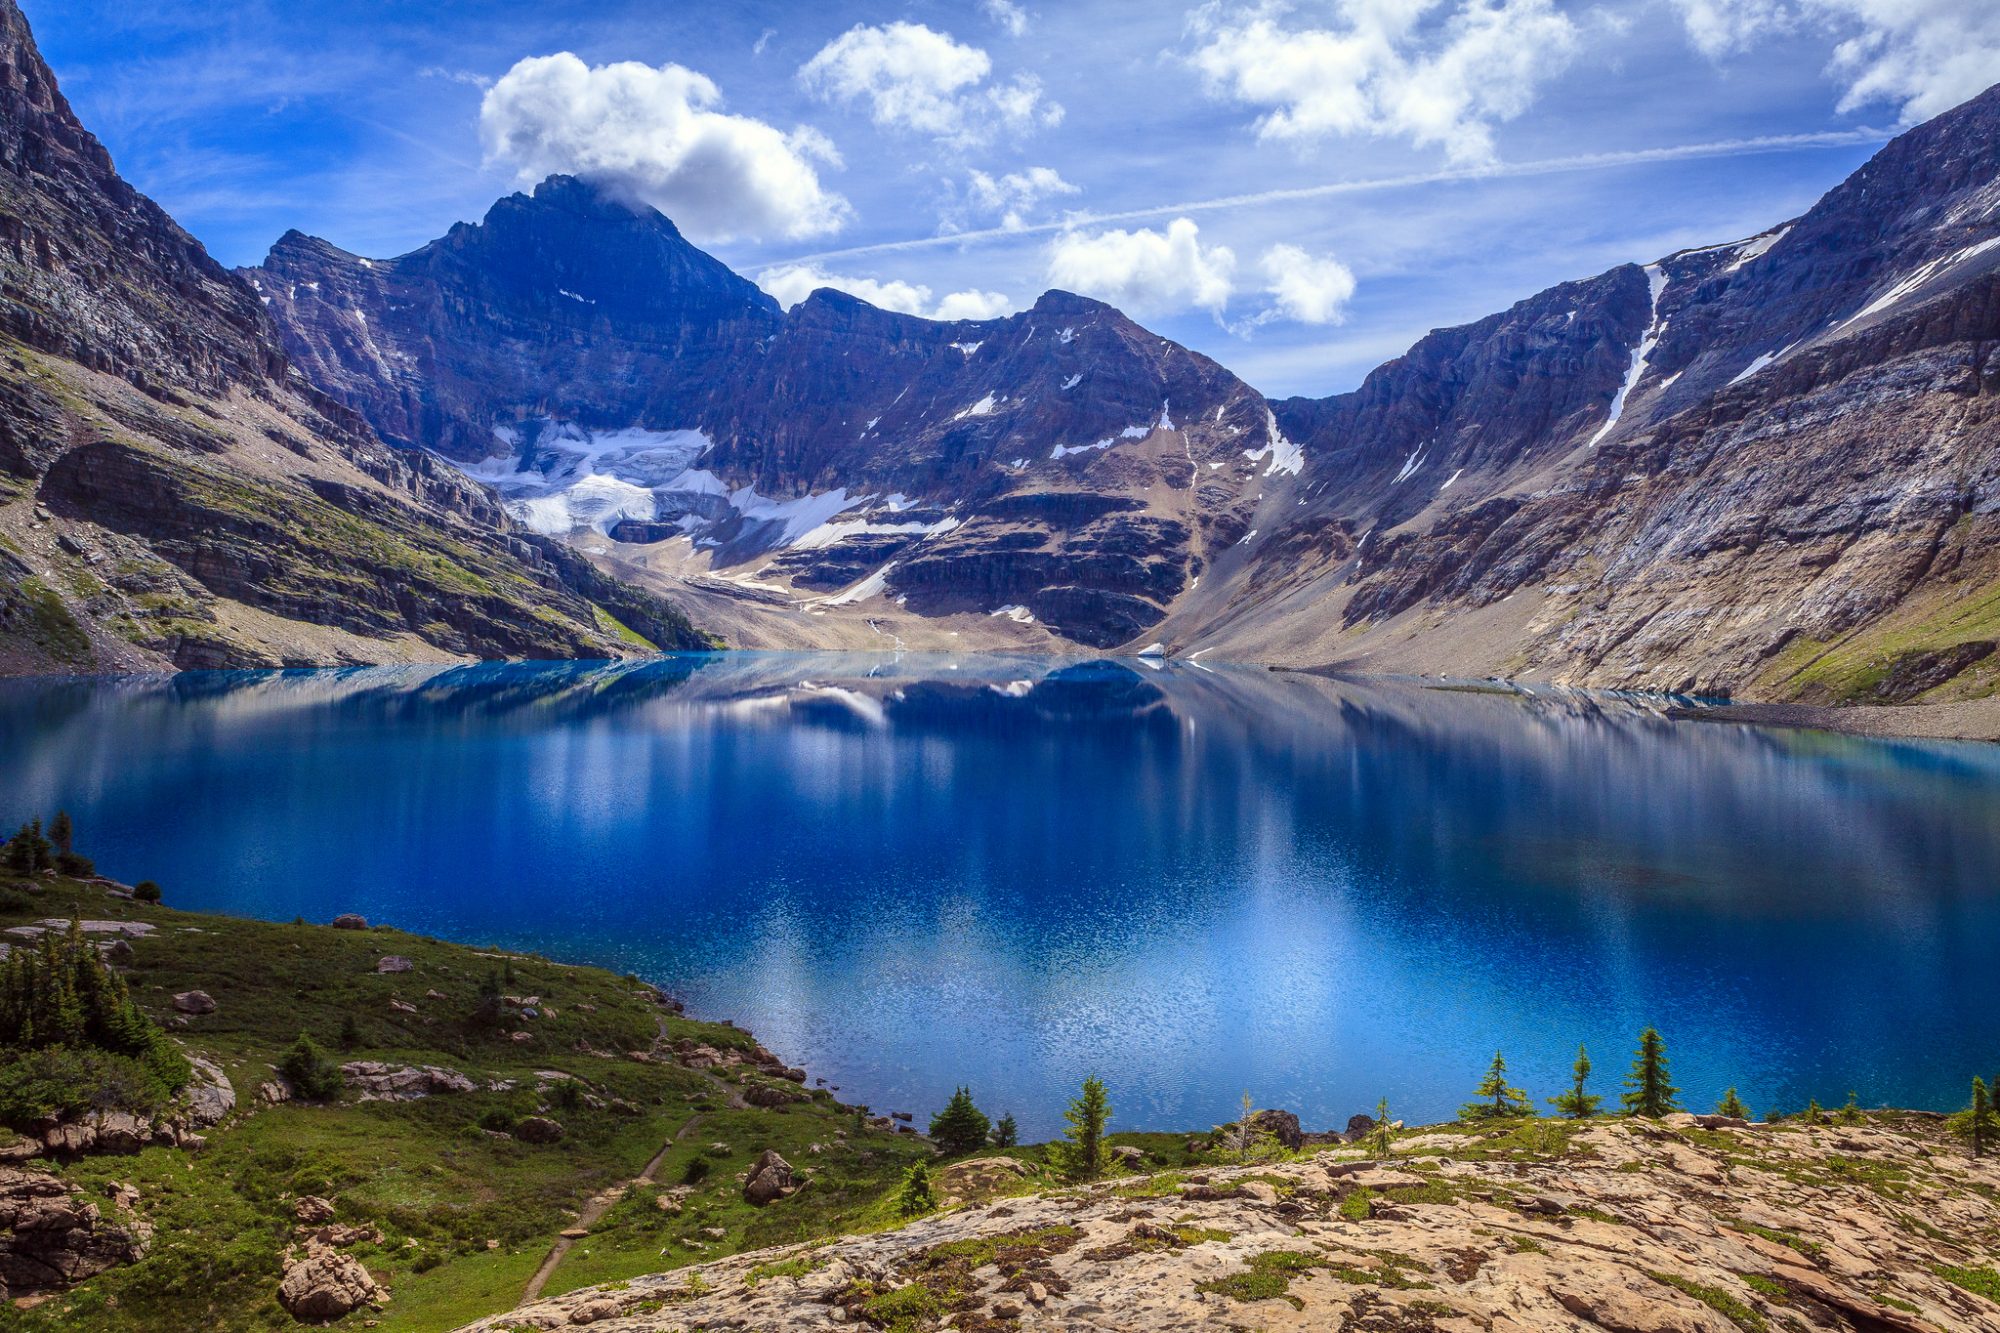 Roundup: Glacier Lakes, Crevasses and Laws - GlacierHub